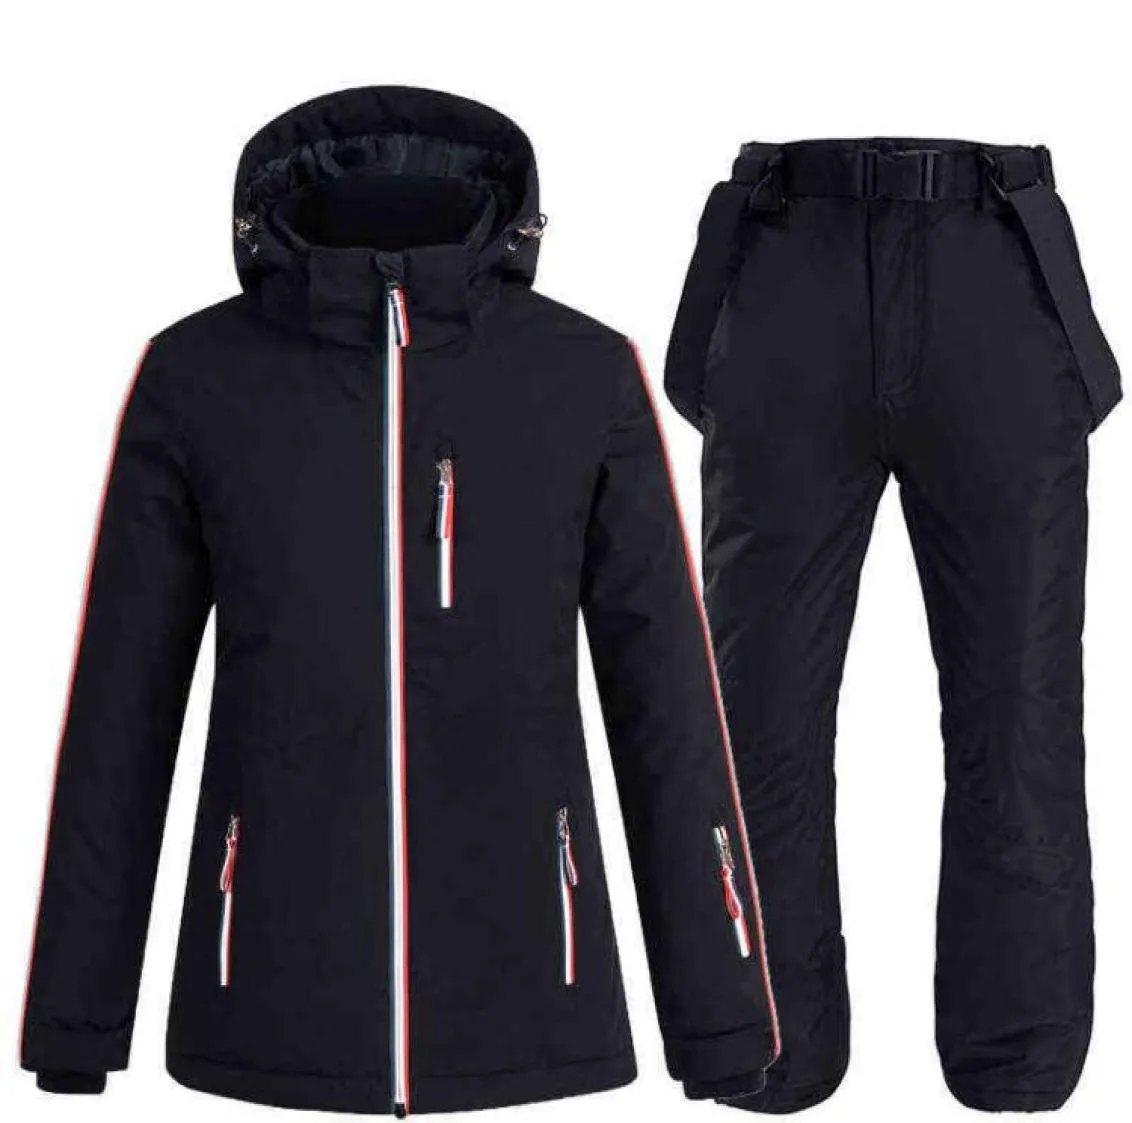 30 Pure Color Ski Suit For Women Windproof Waterproof Snowboard Jacket Sets Winter Snow Costumes Ski Jacket Strap Snow Pants 225827349